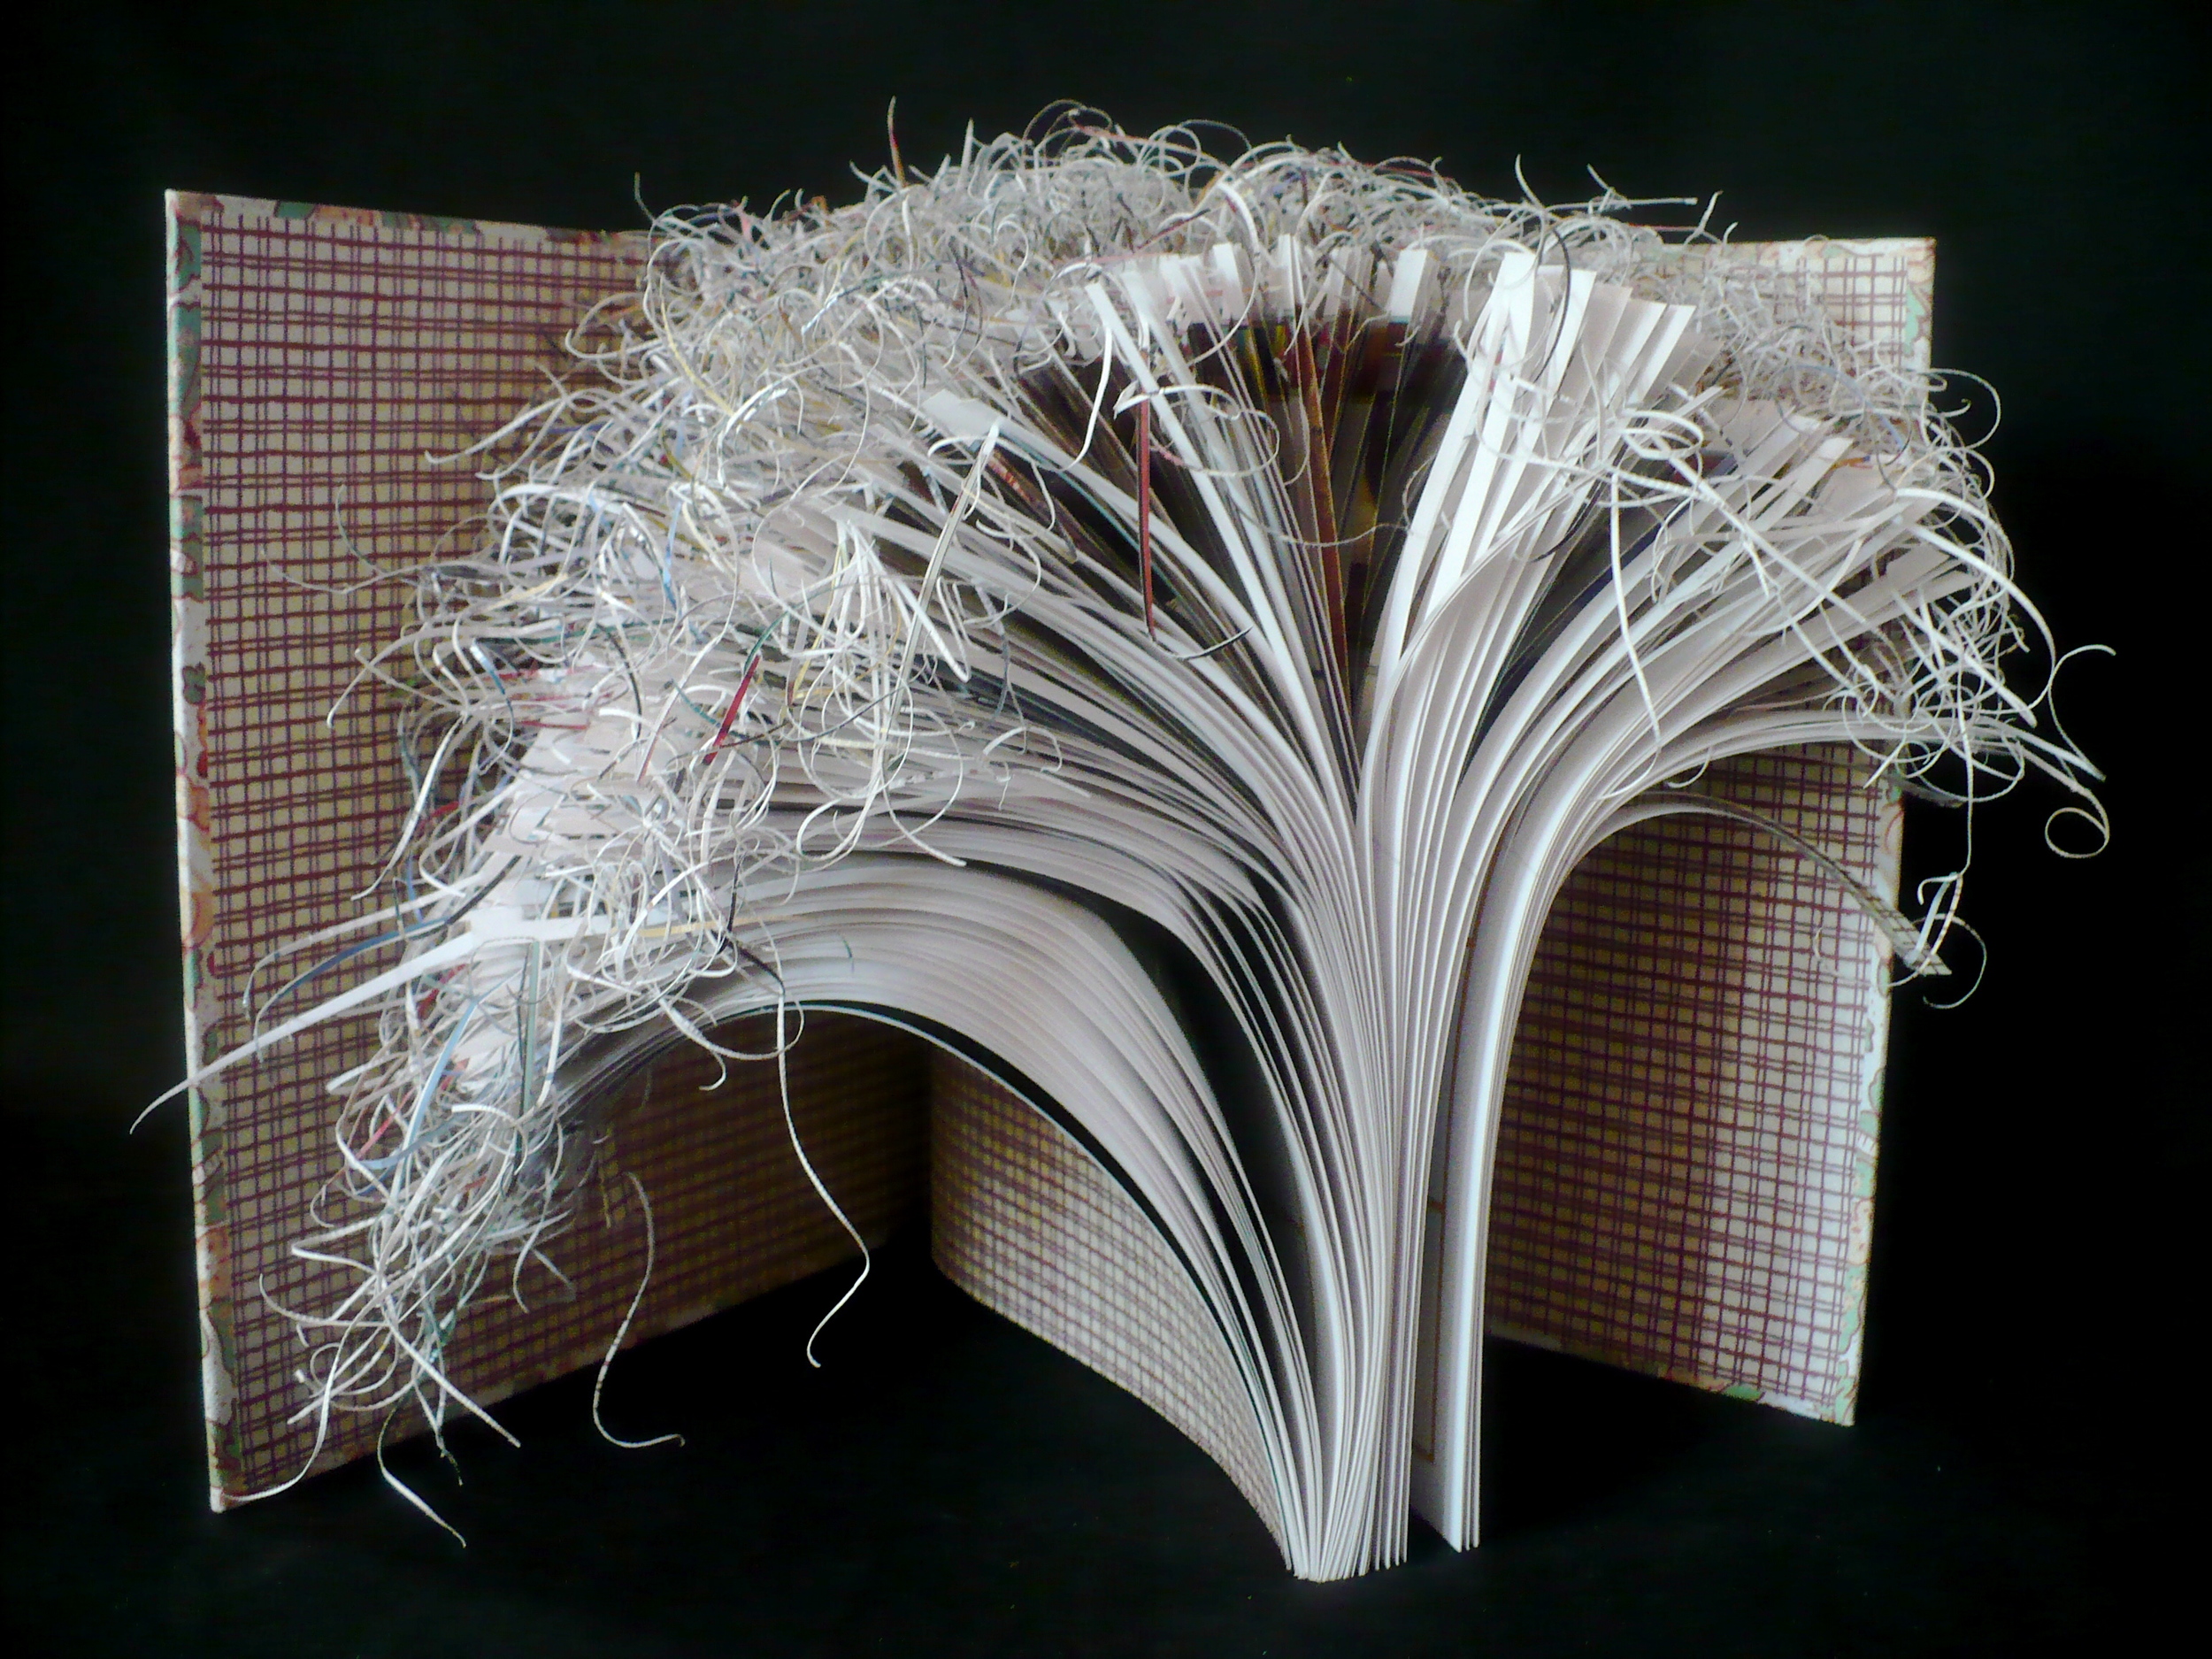 books21GreenSpine, 7" x 11" x 7.5", 2007-2015